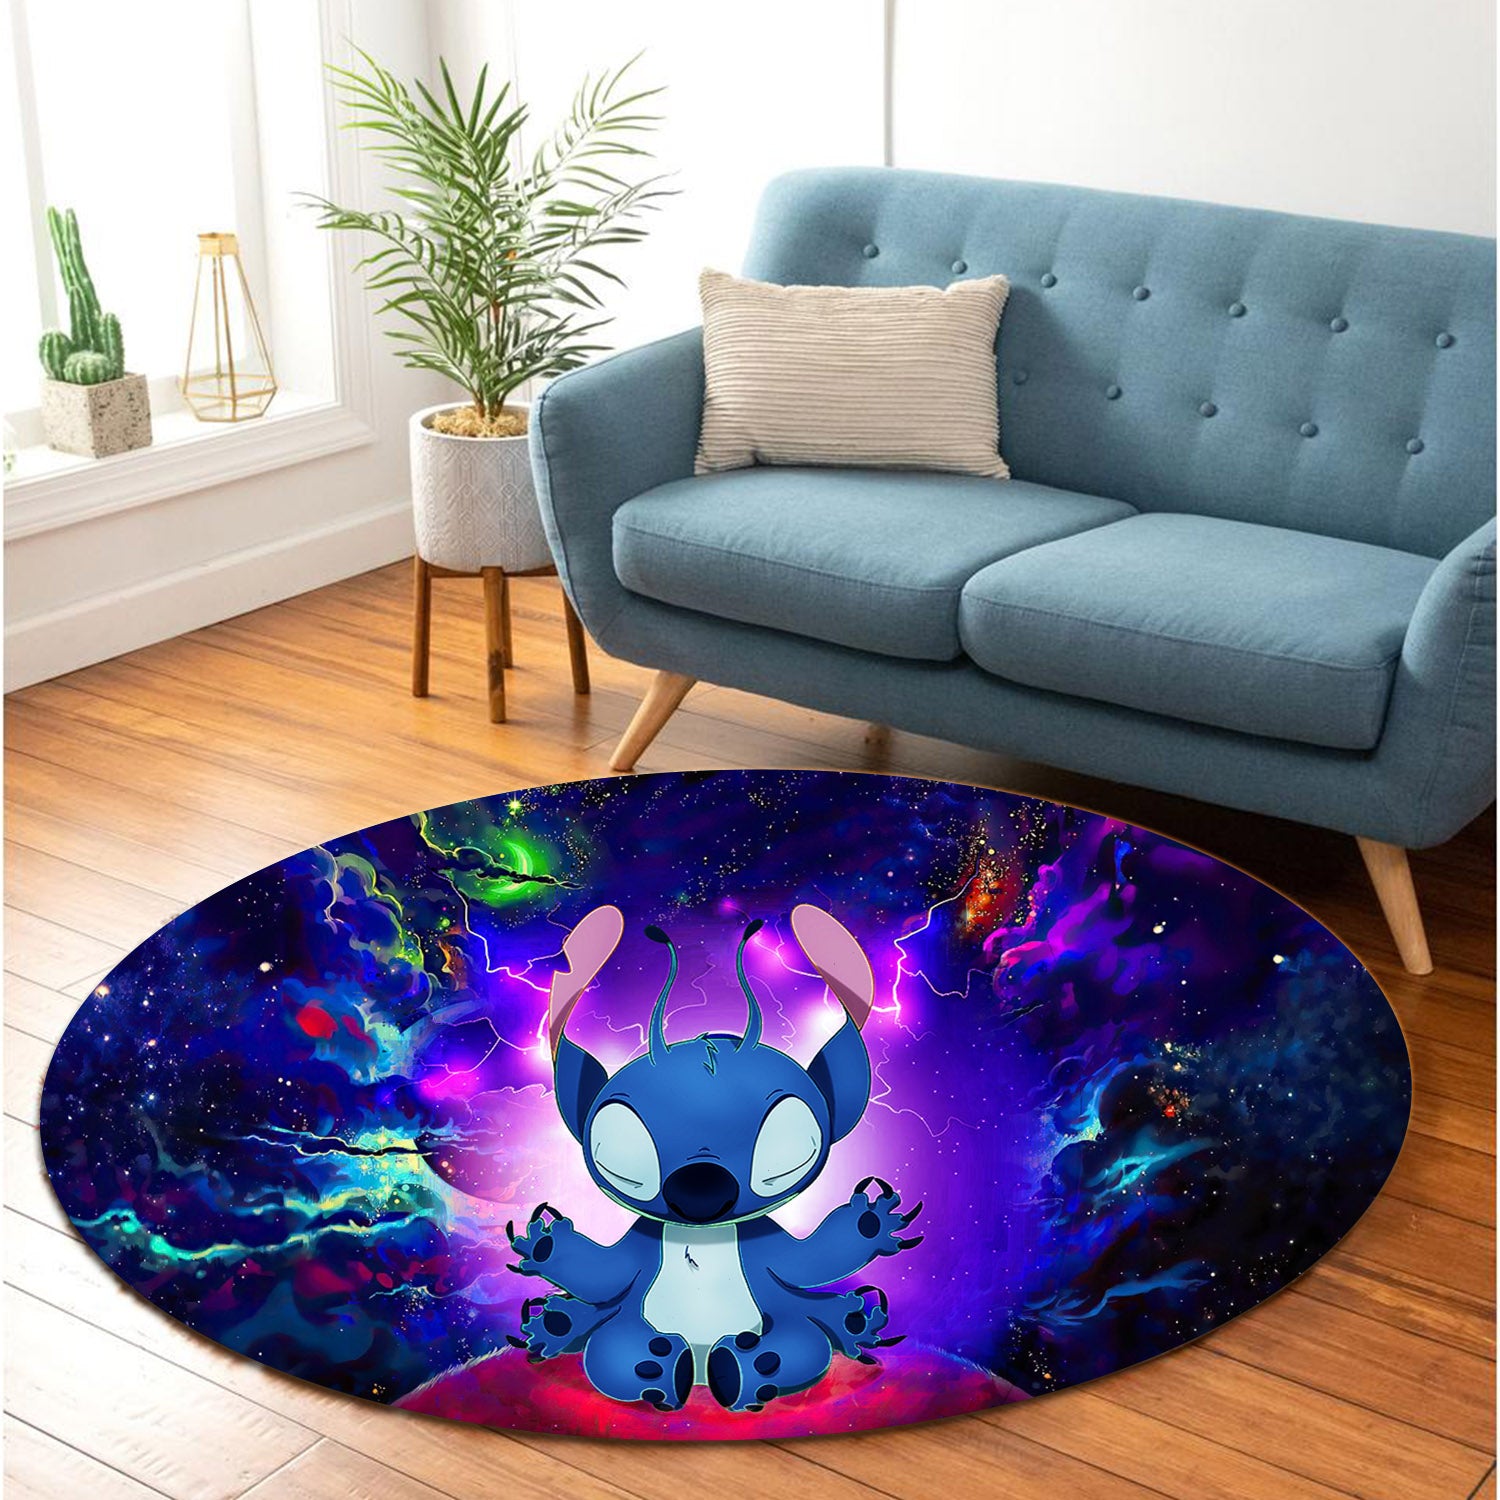 Stitch Yoga Love You To The Moon Galaxy Round Carpet Rug Bedroom Livingroom Home Decor Nearkii